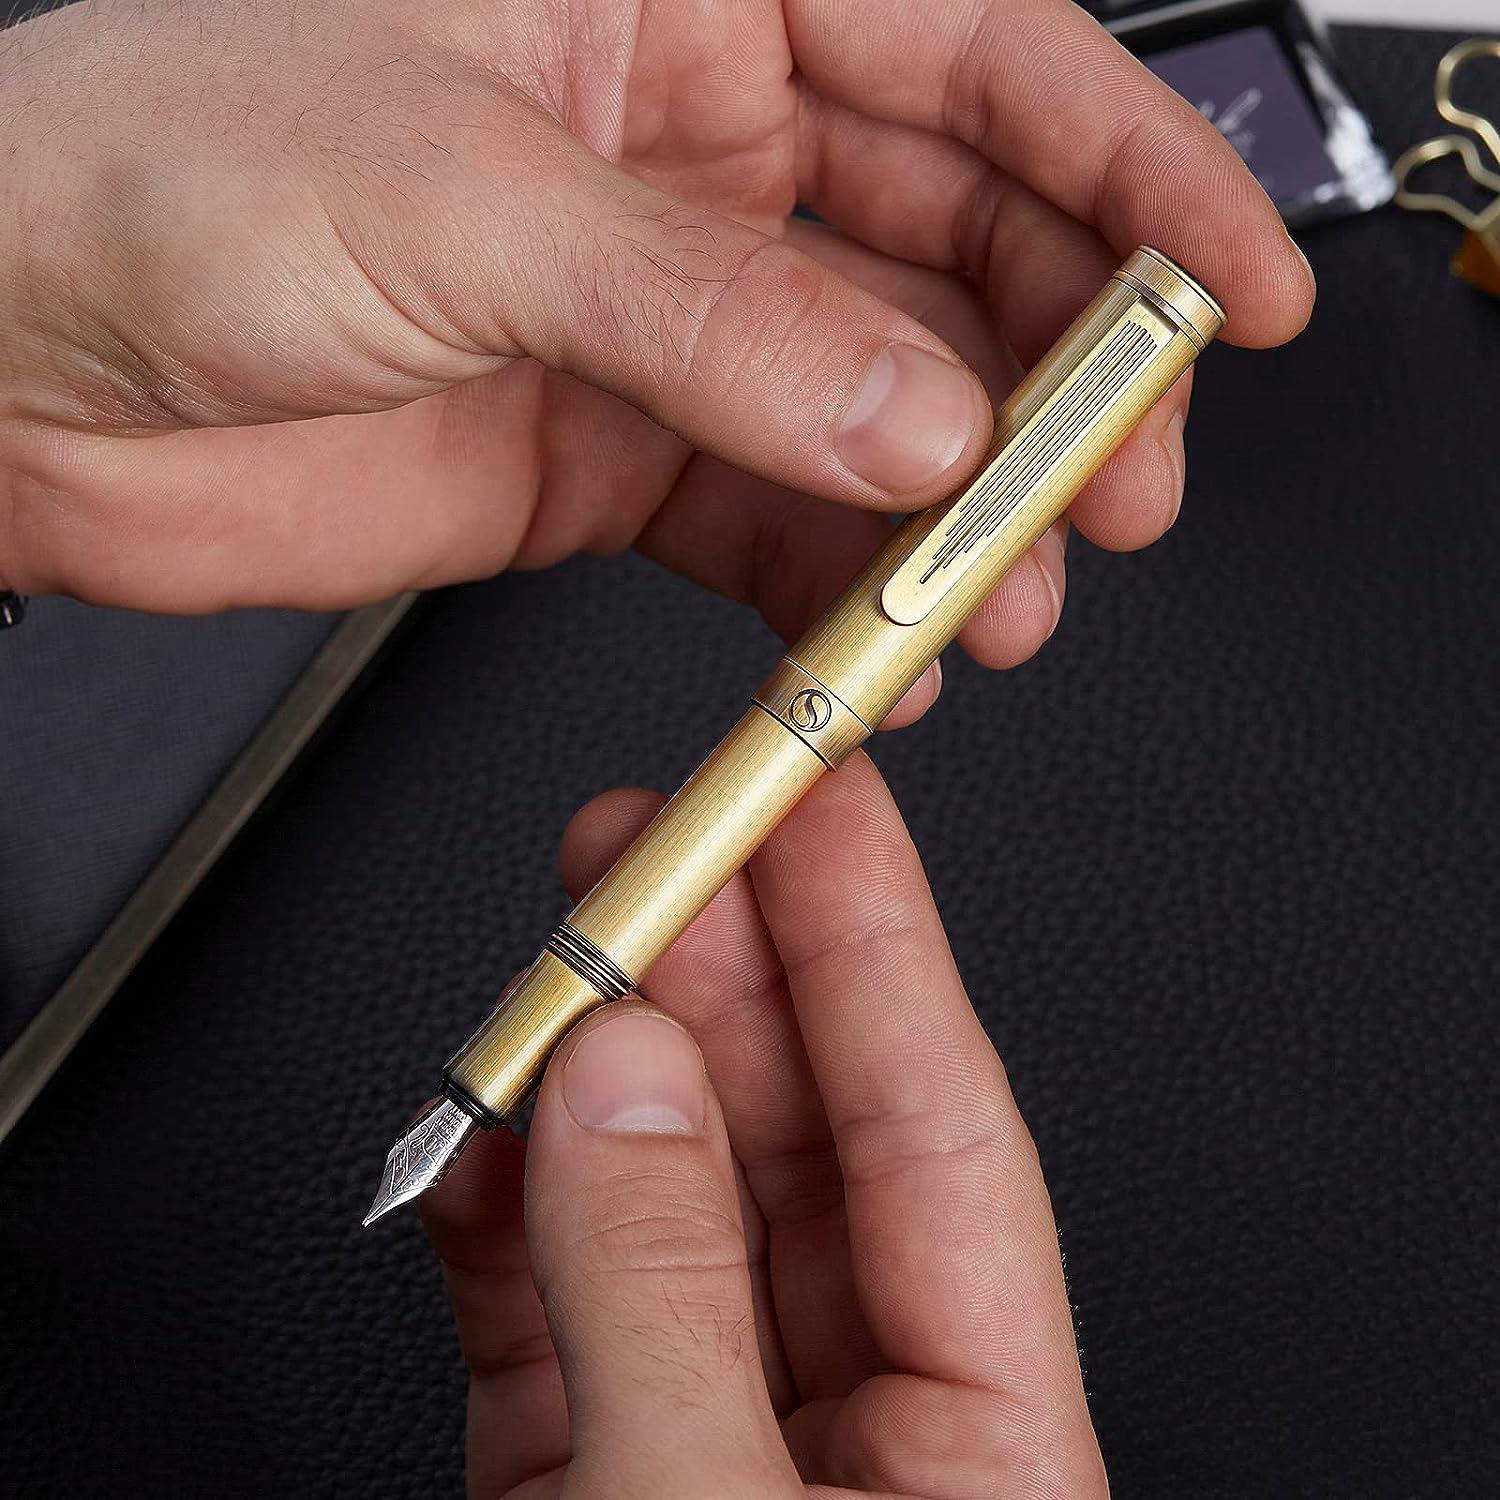 Scriveiner Luxury EDC Fountain Pen (Medium), Stunning Heavy Brass Pocket Pen, Hand Brushed Bronze Finish